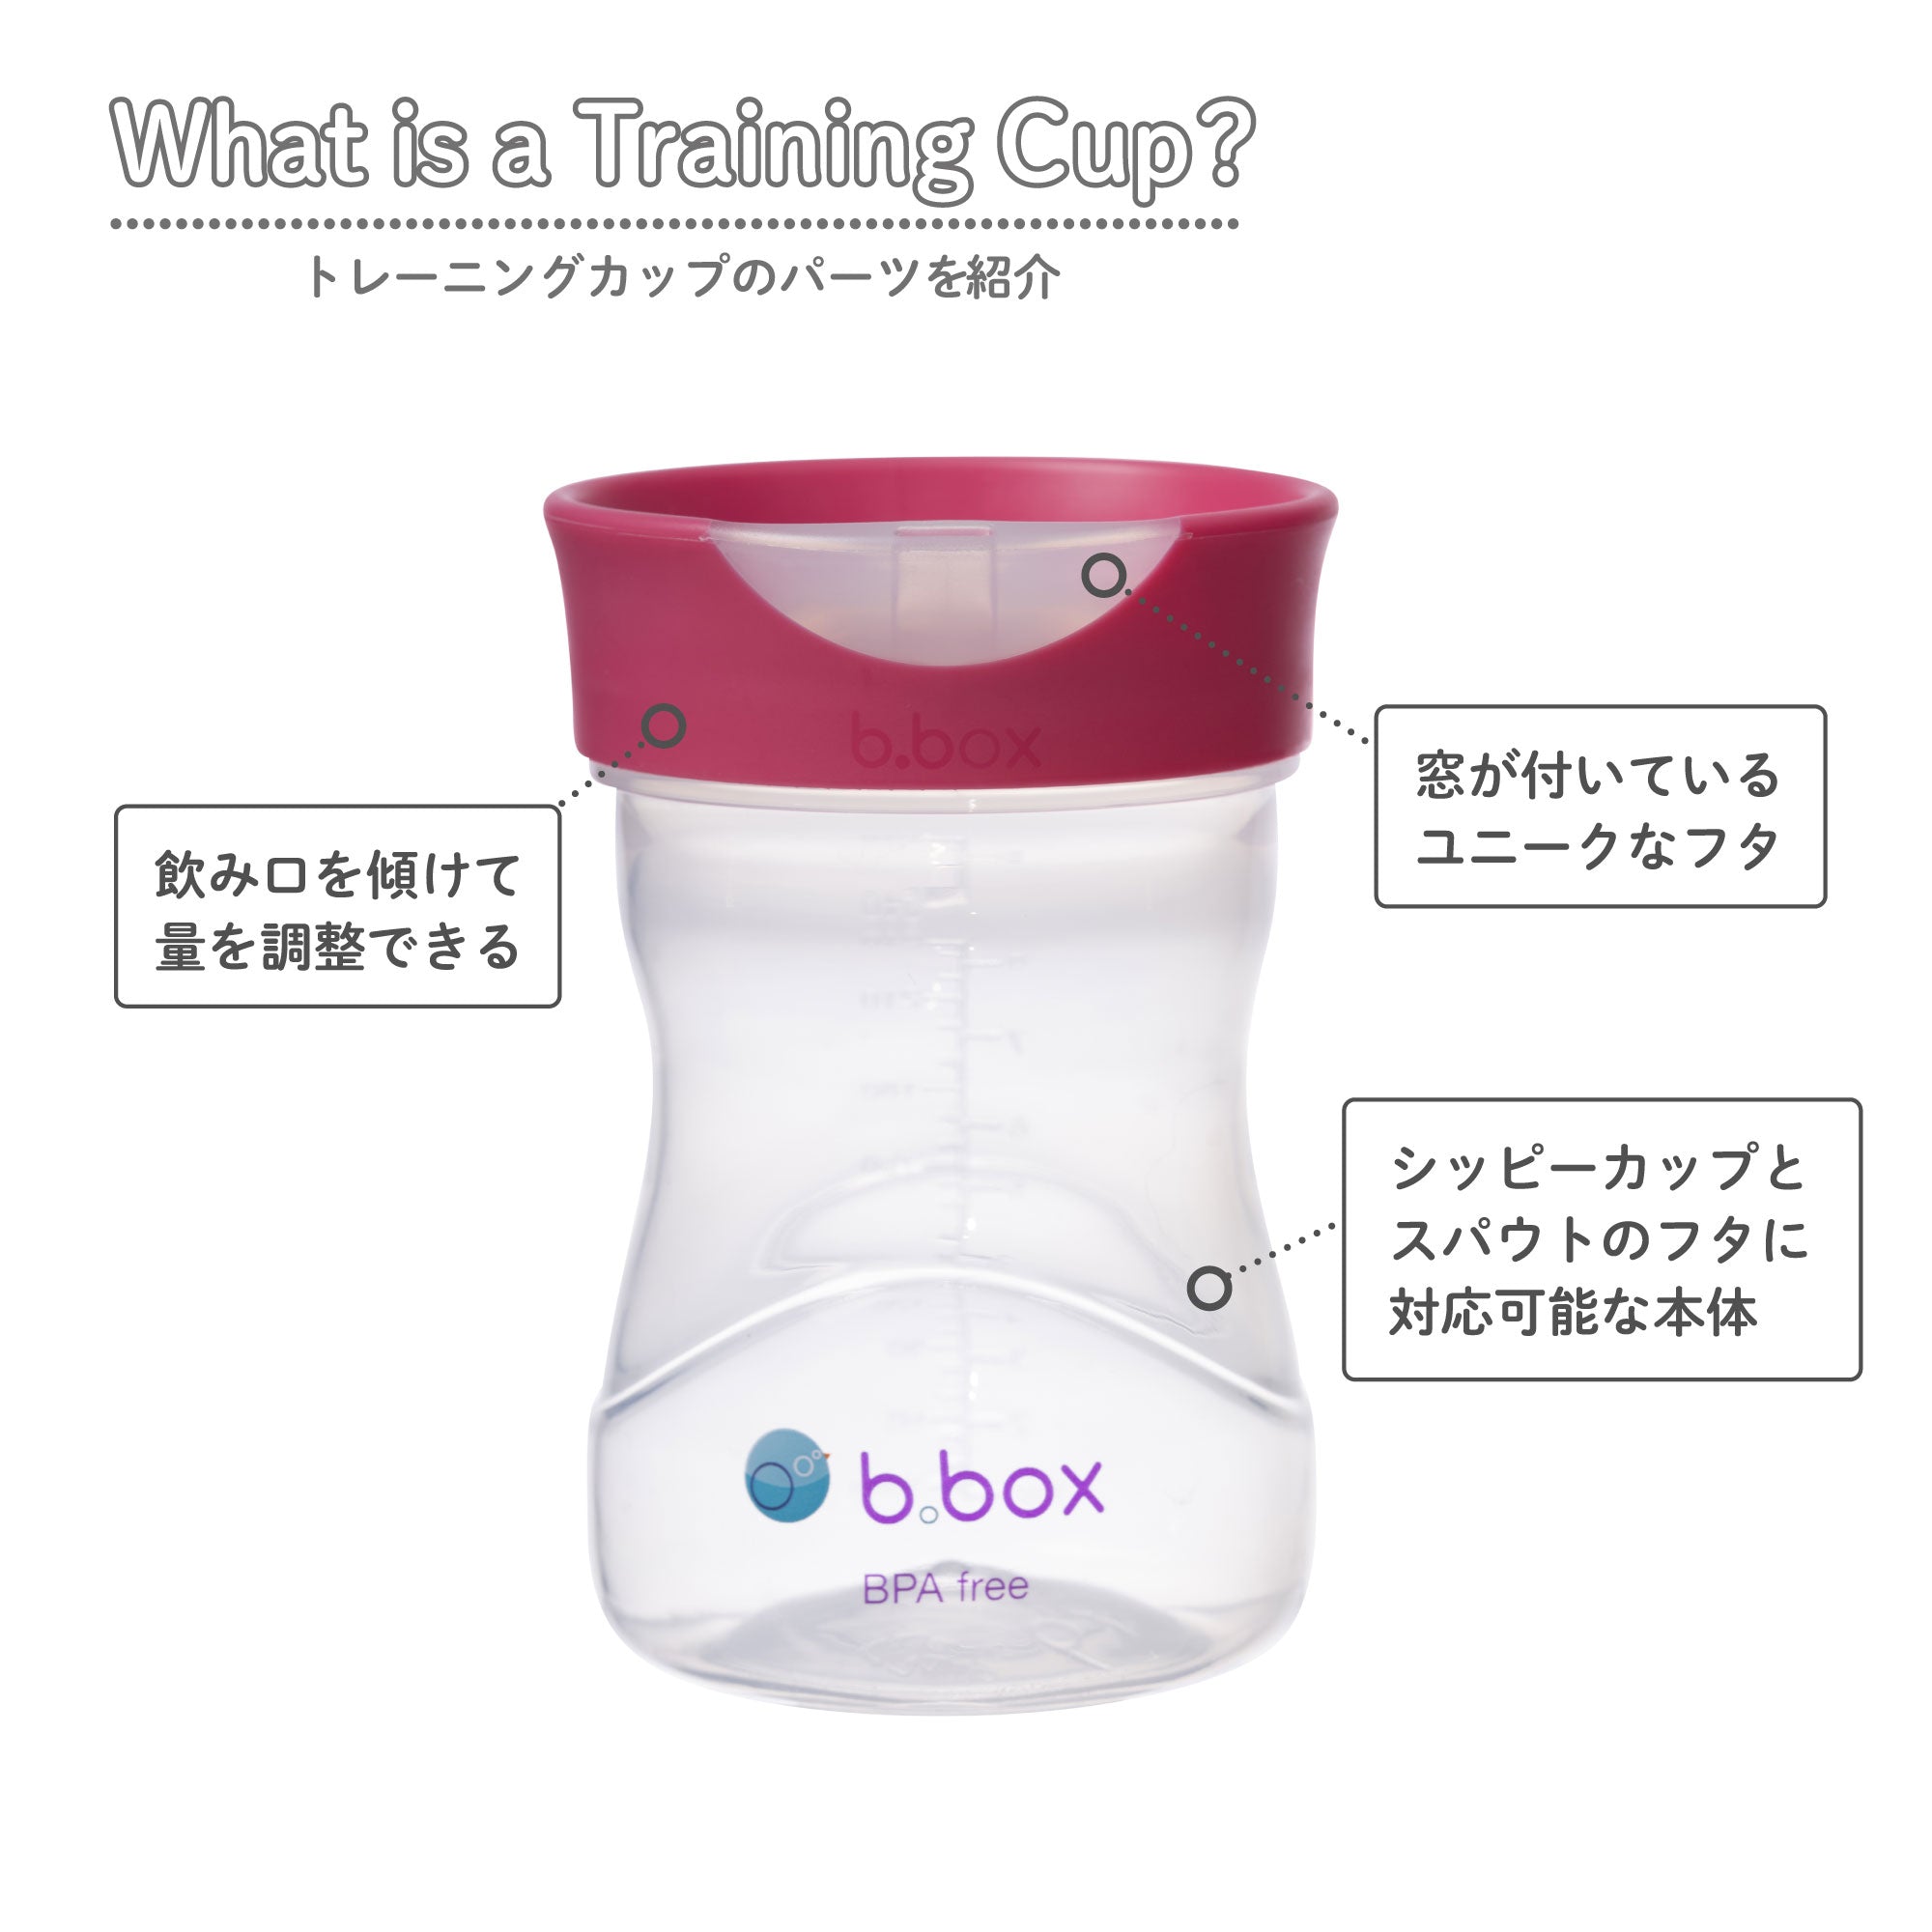 *b.box* Training Cup トレーニングカップ  240ml - raspberry